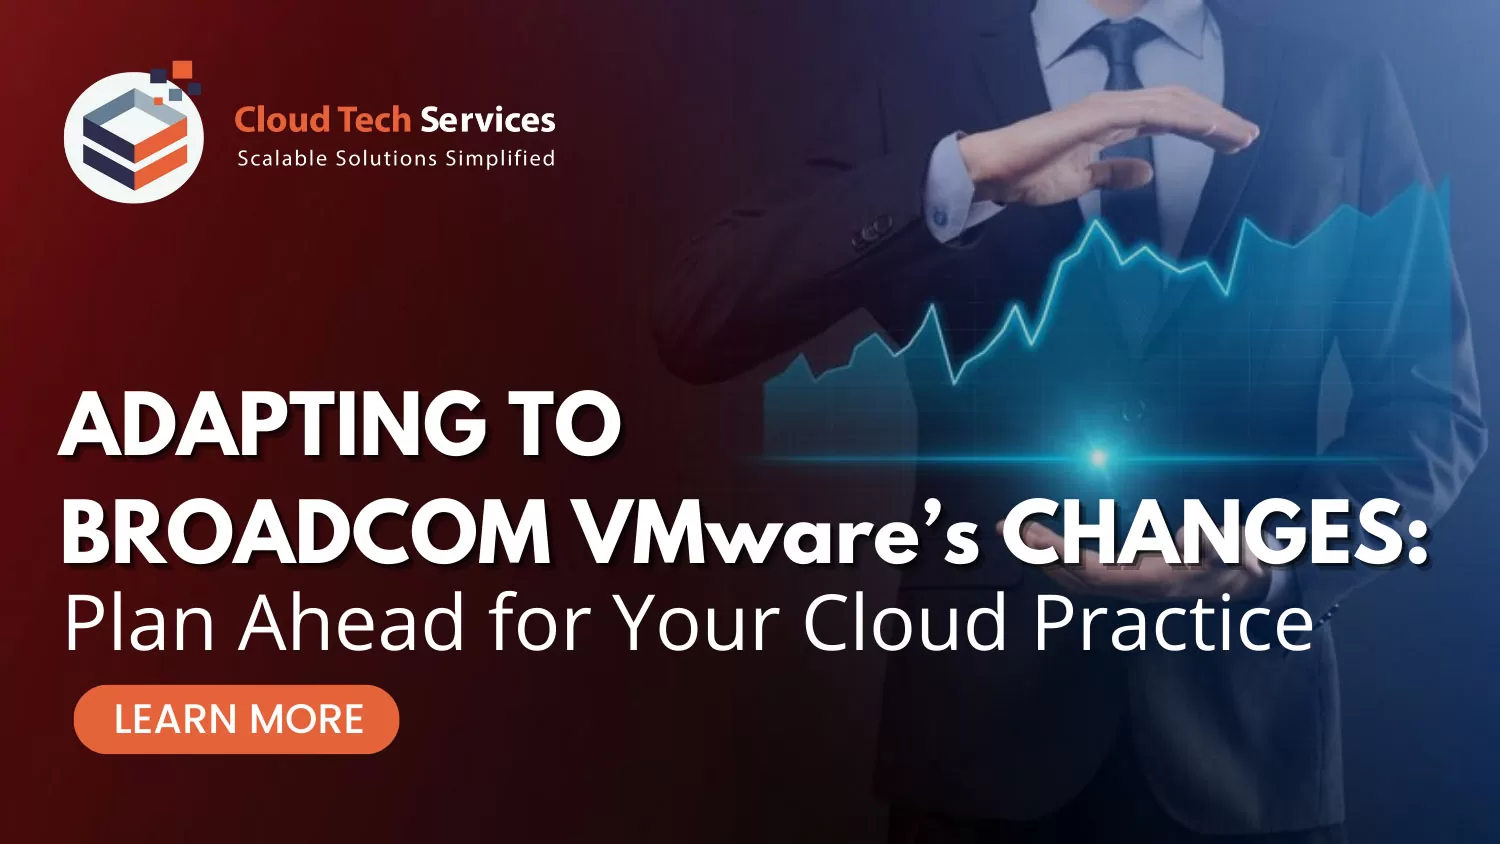 Adapting to broadcom vmware's changes - plan ahead for your cloud practice